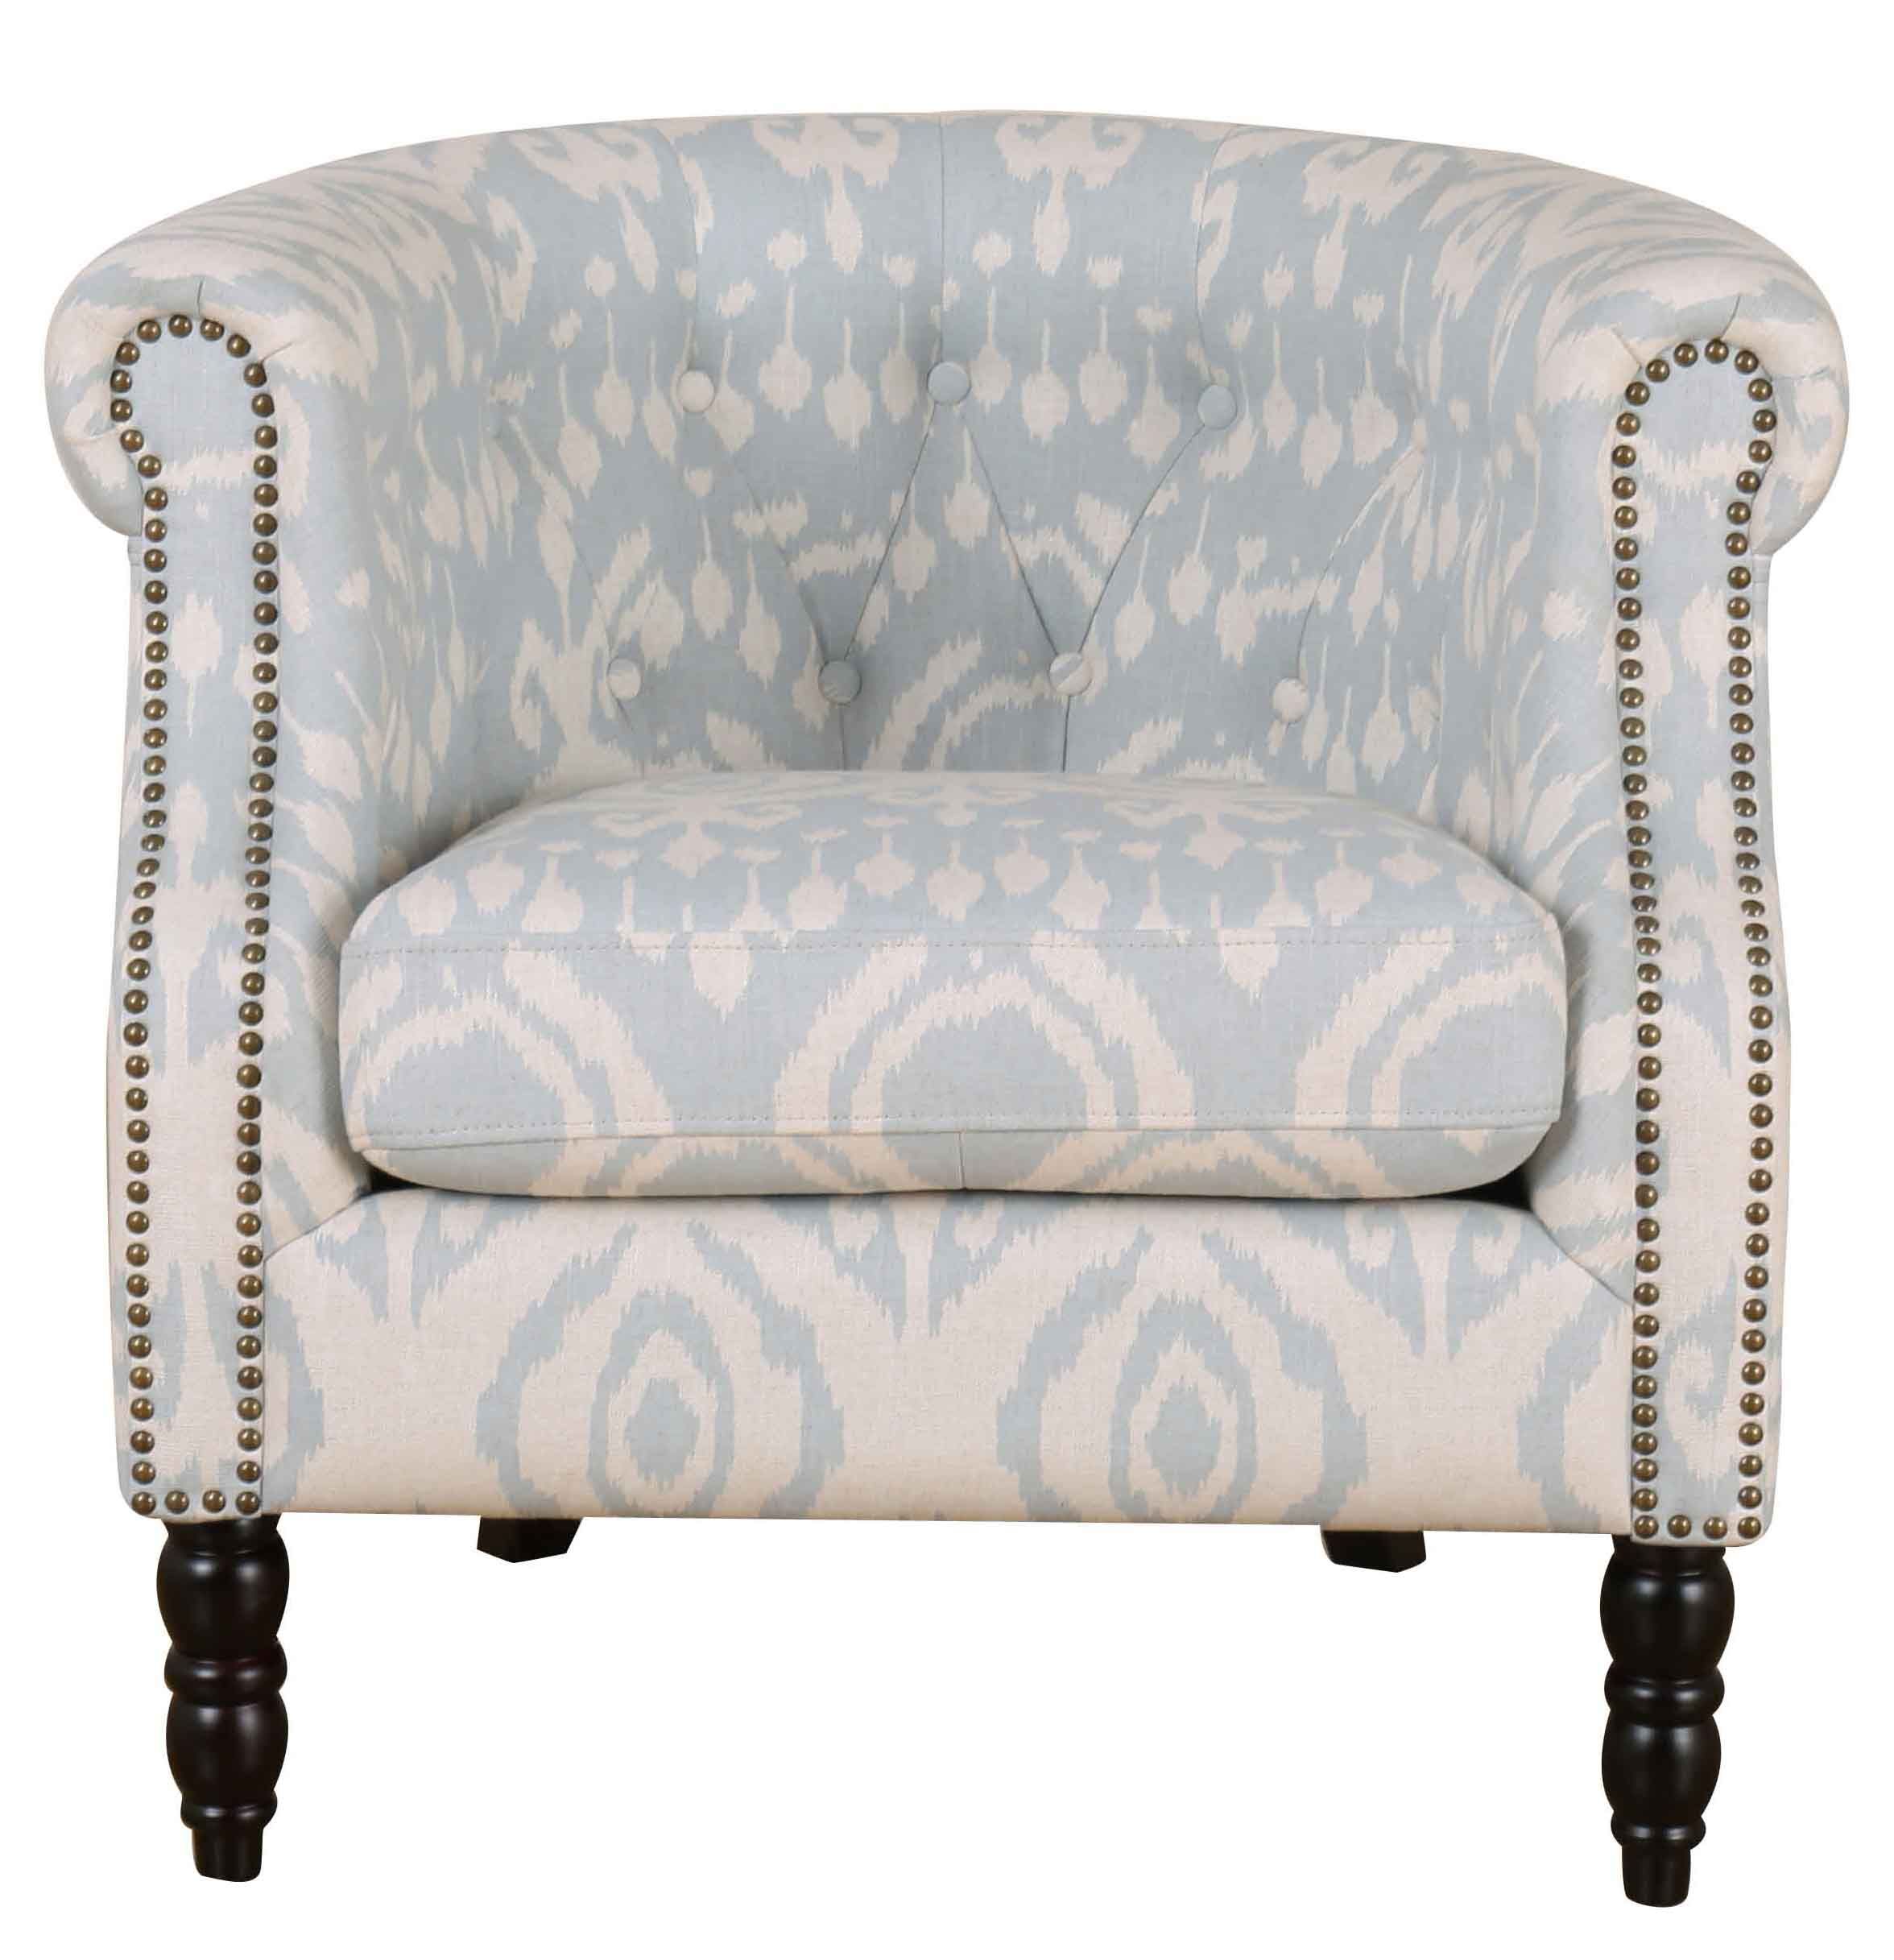 Cosette Chairandrew Martin Origin In Armchairs Regarding Cosette Leather Sofa Chairs (View 17 of 25)